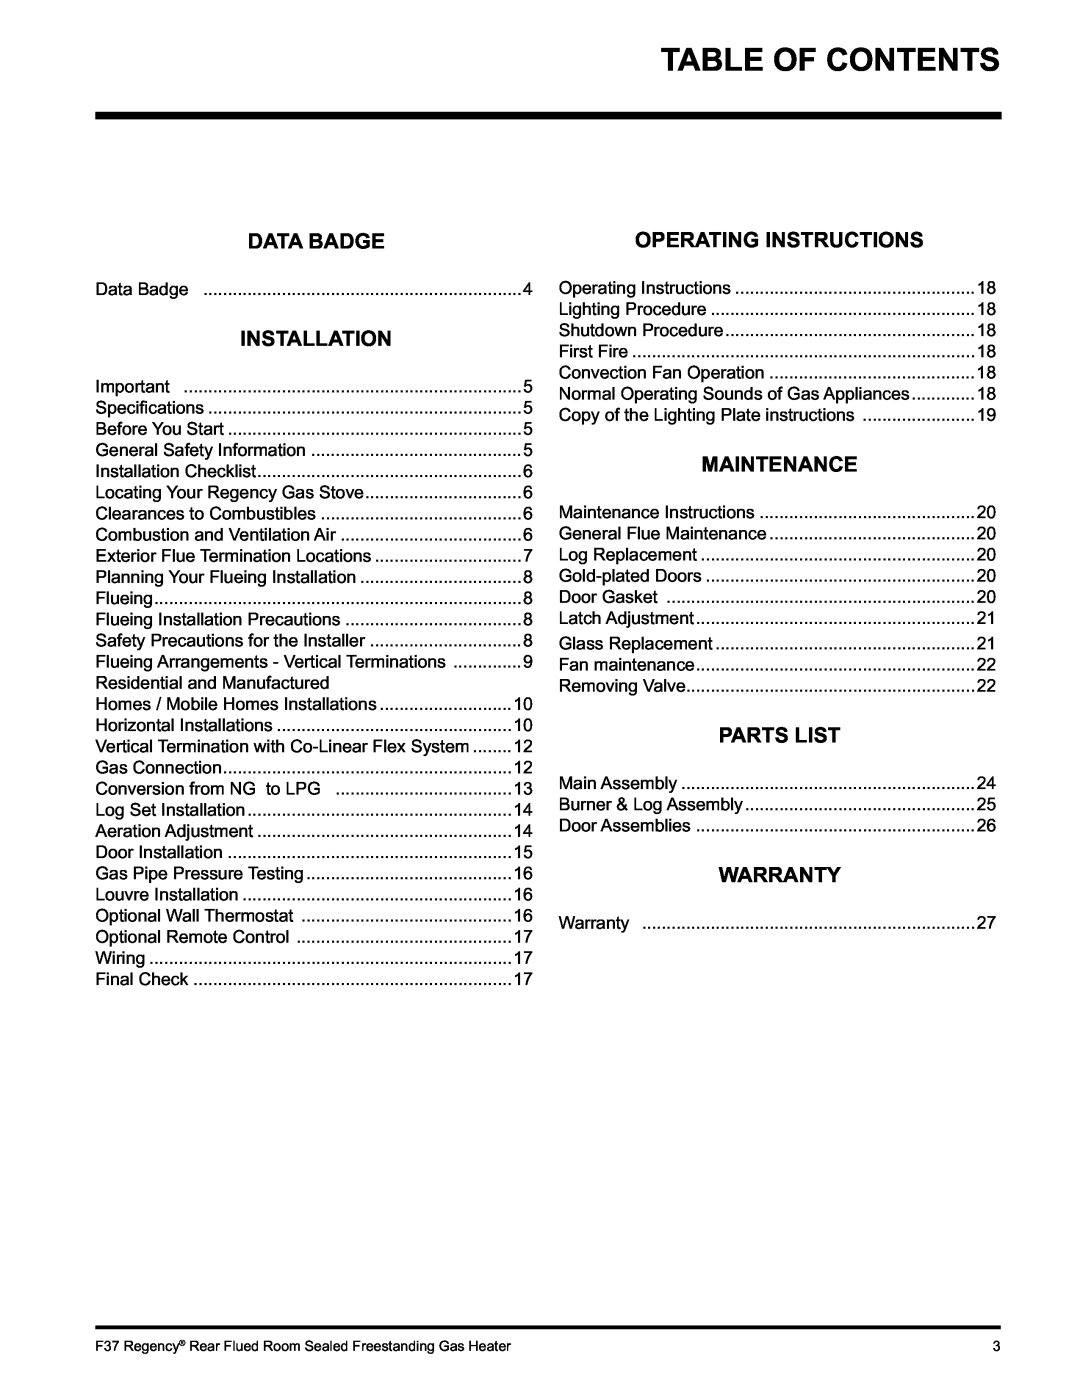 Regency F37-LPG Table Of Contents, Data Badge, Installation, Maintenance, Parts List, Warranty, Operating Instructions 